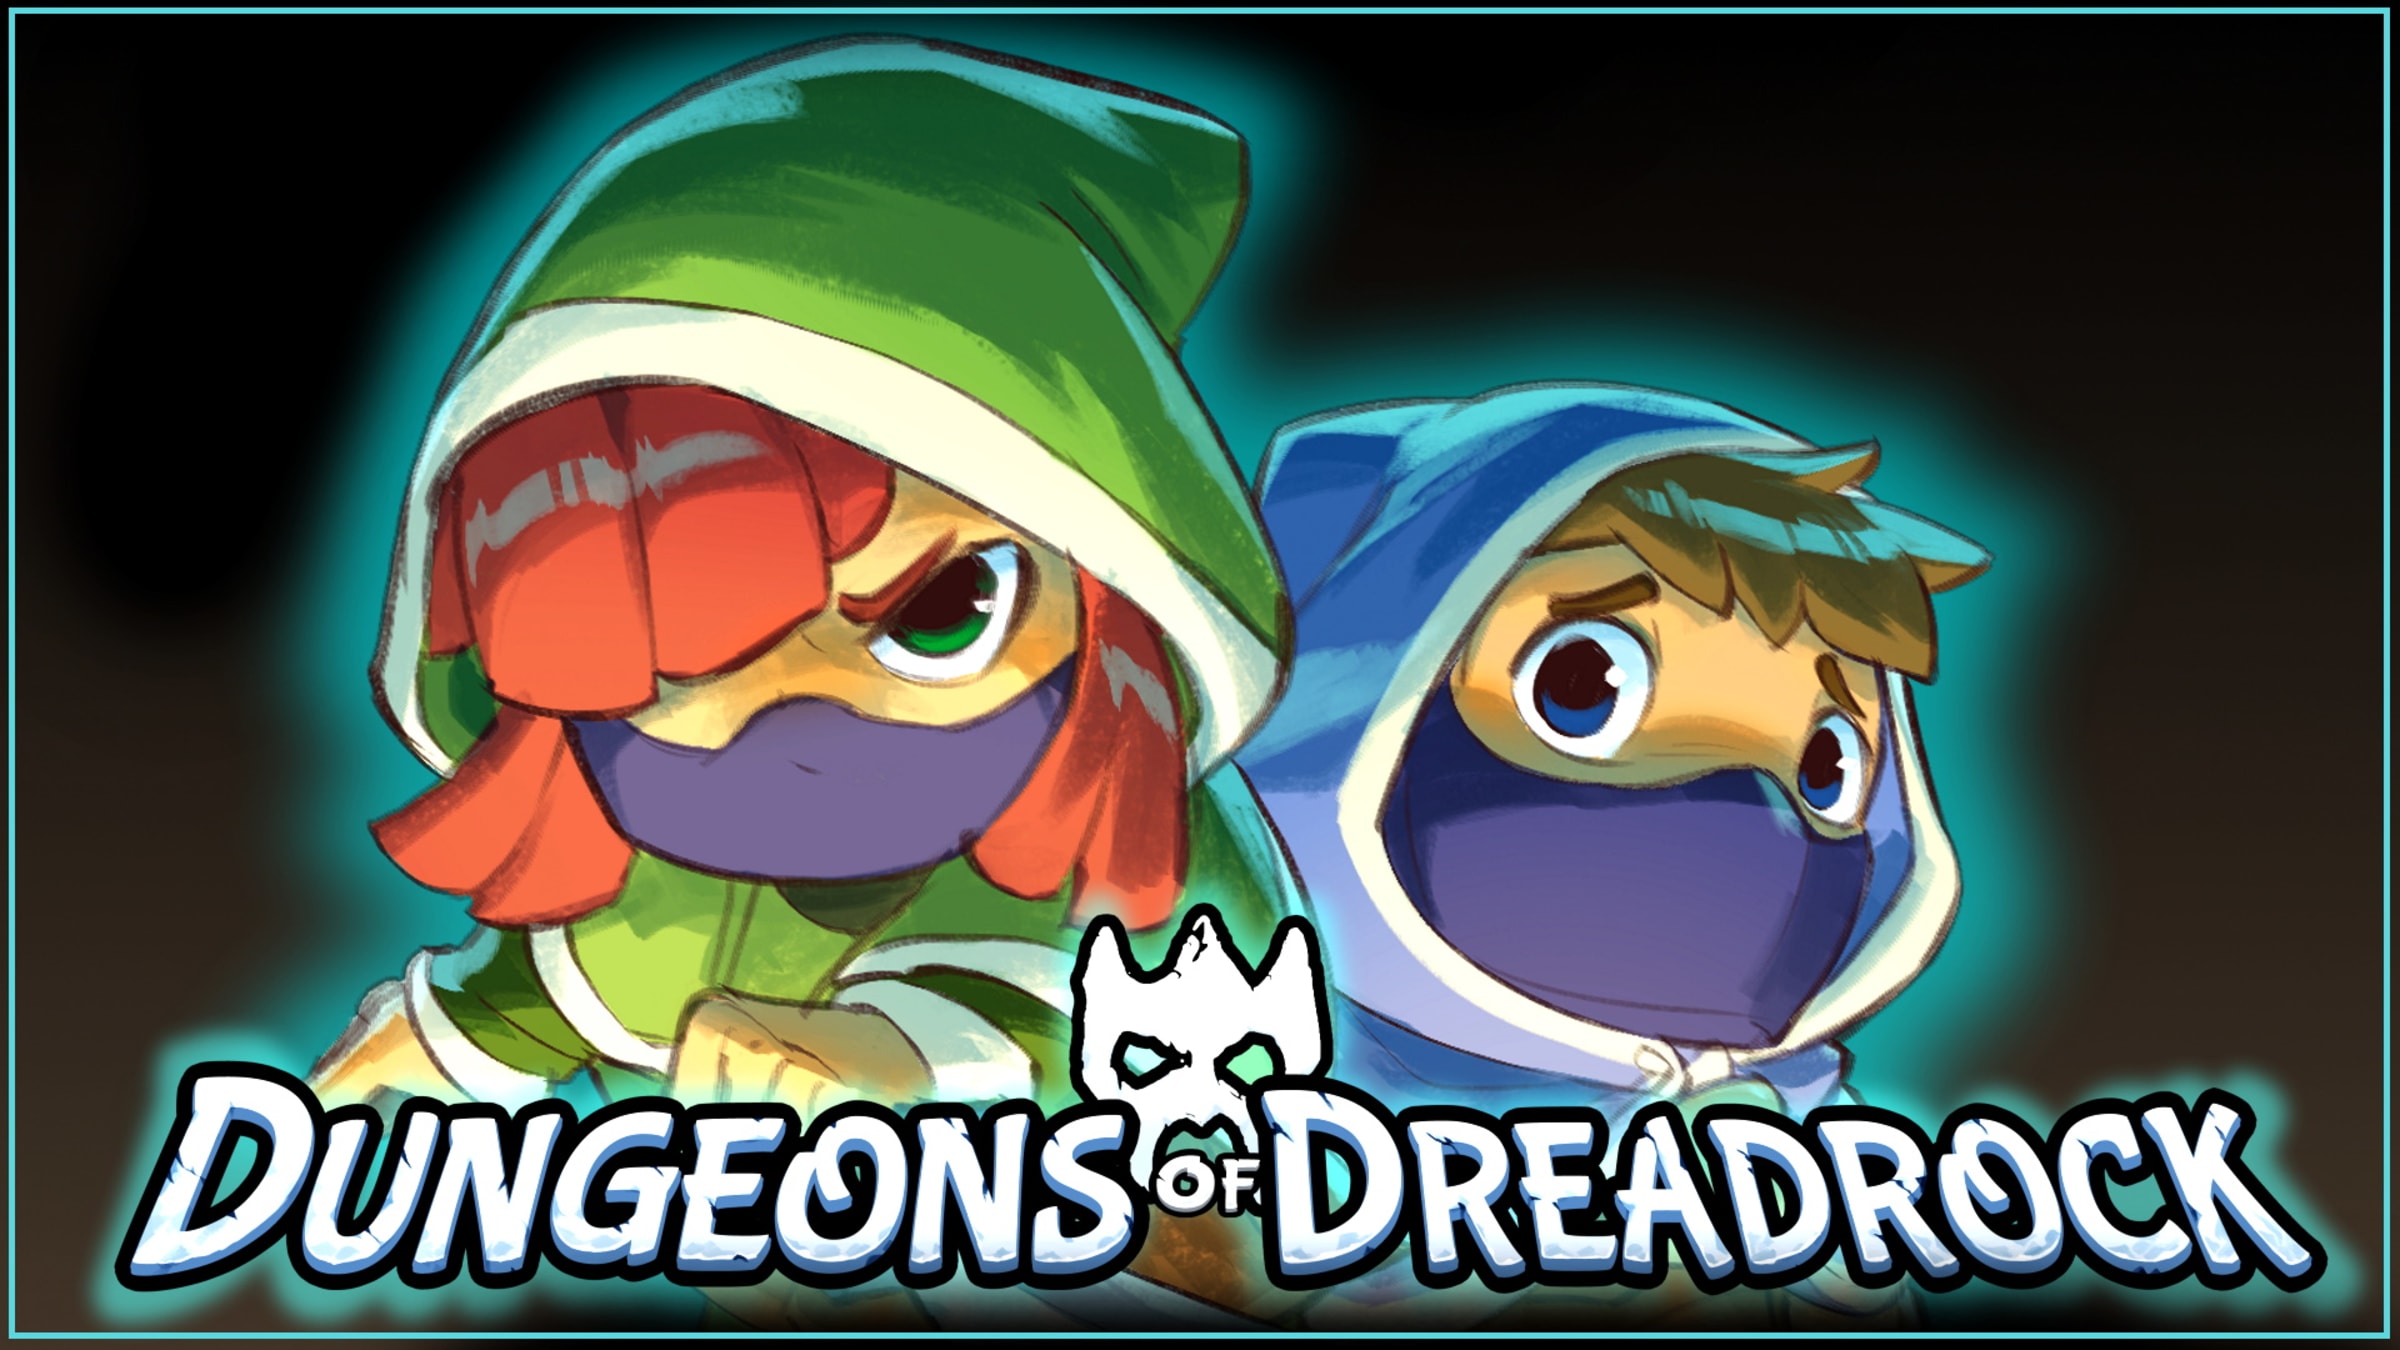 Dungeons of Dreadrock (Nintendo Switch Digital Download) $2